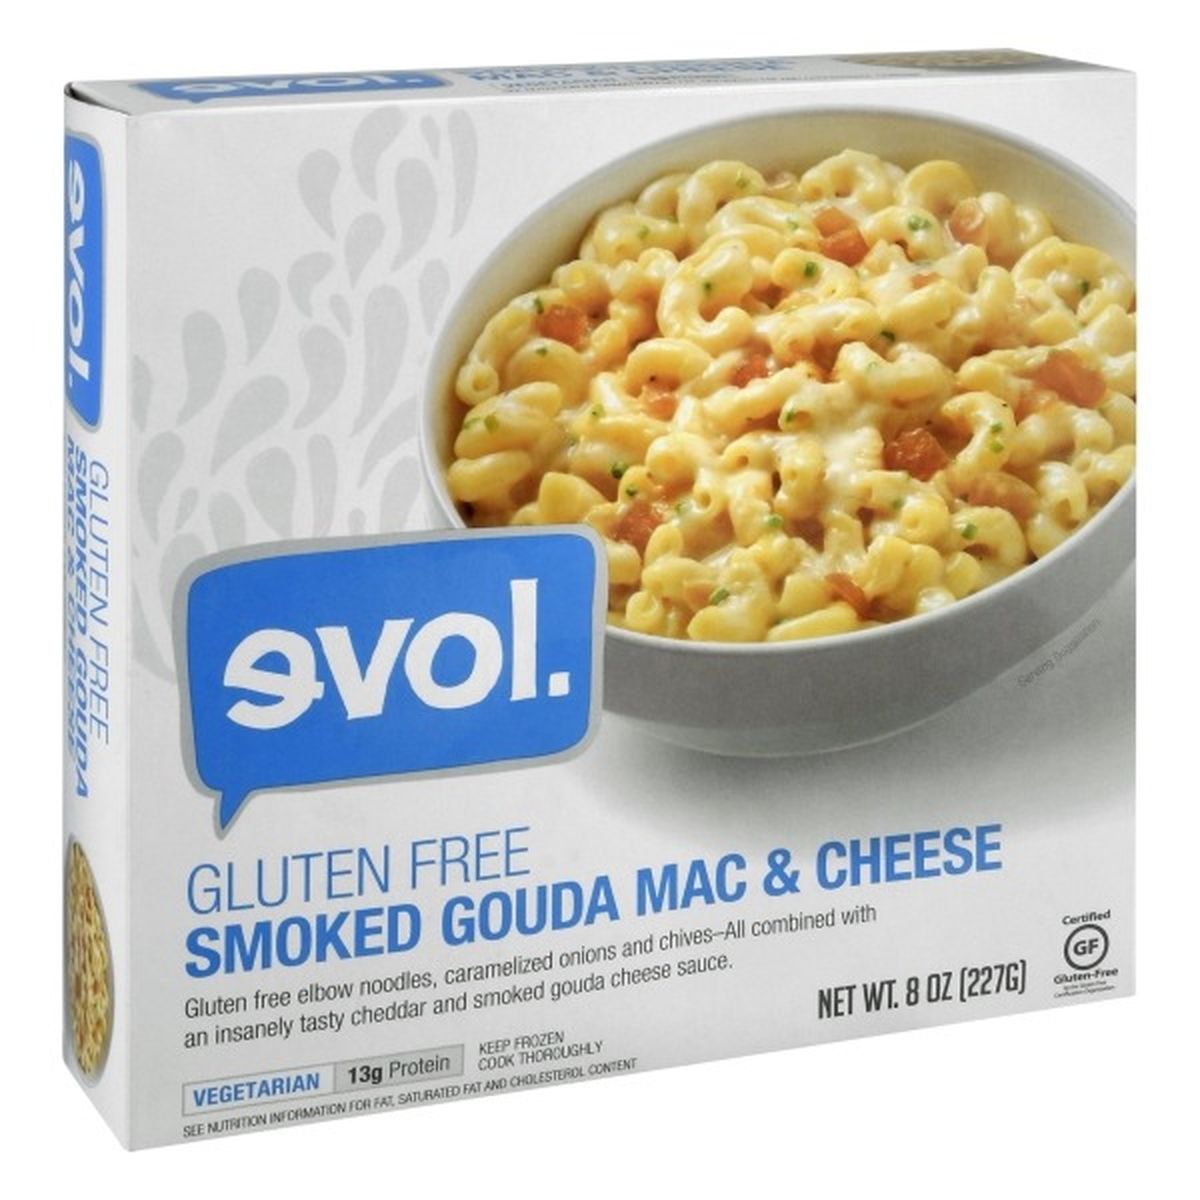 Calories in Evol Mac & Cheese, Gluten Free, Smoked Gouda